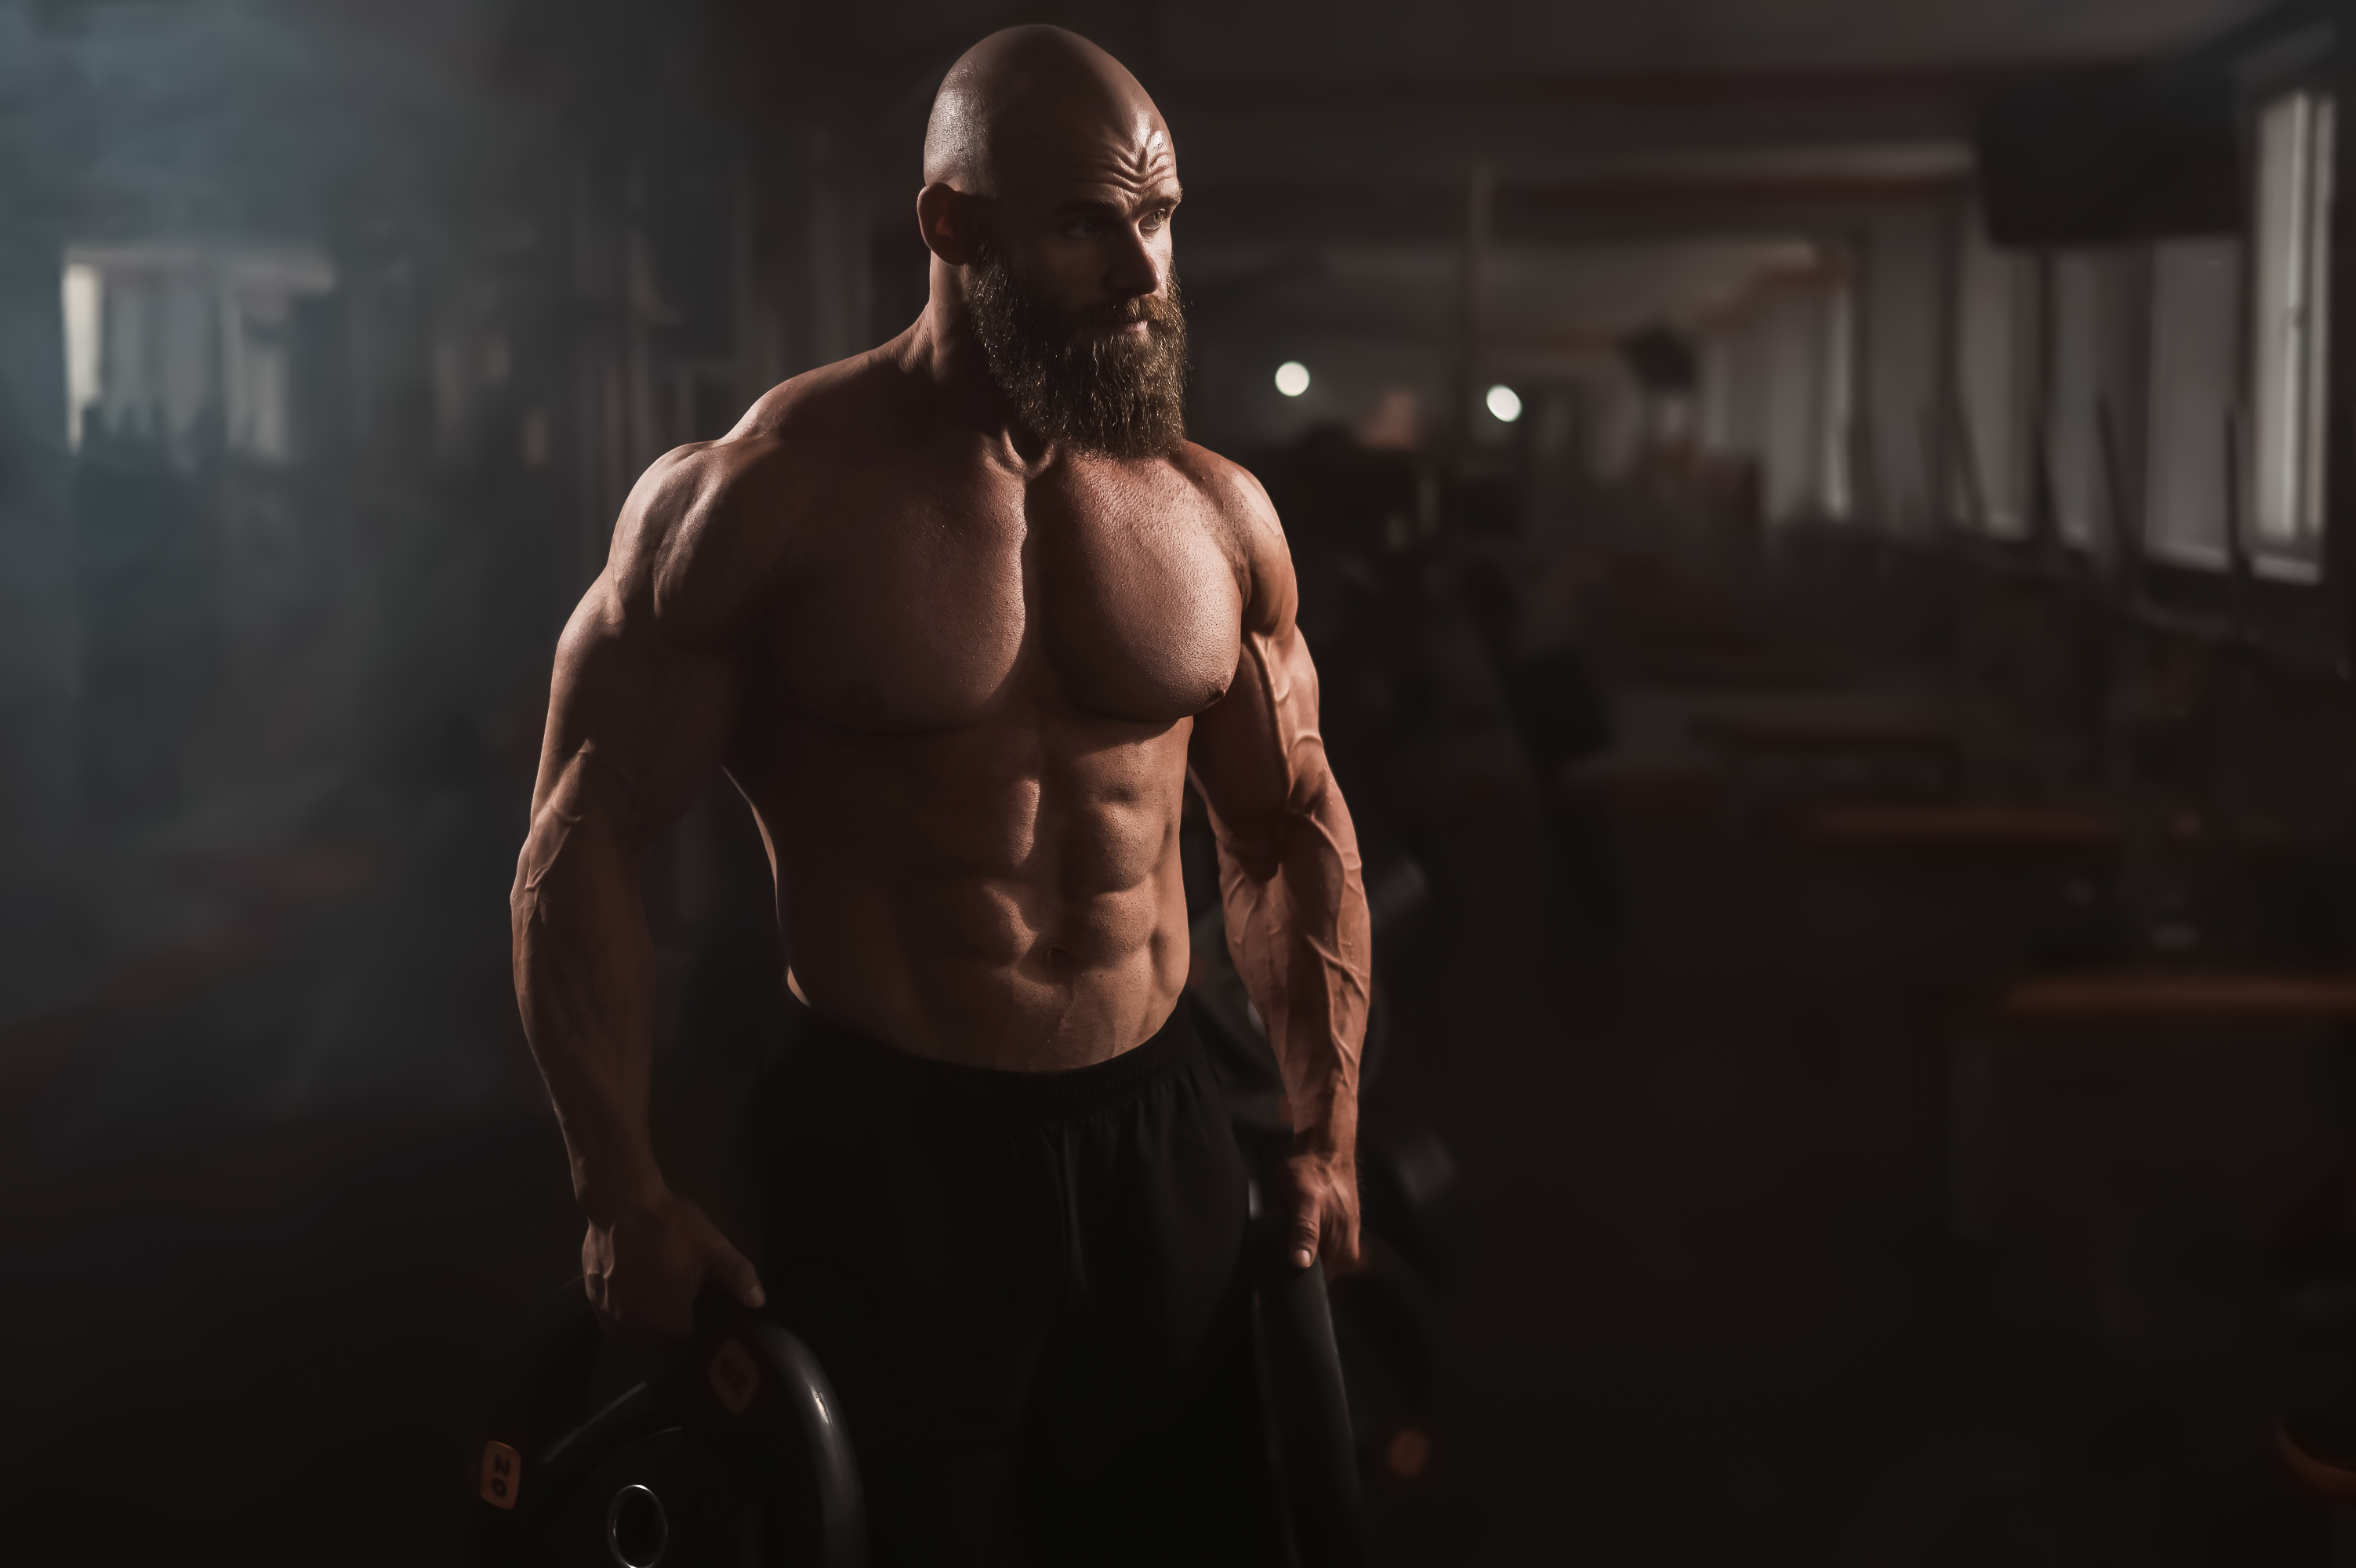 People 3005x2000 Mikhail Reshetnikov men beard muscular gyms looking away shirtless bald shaved head low light